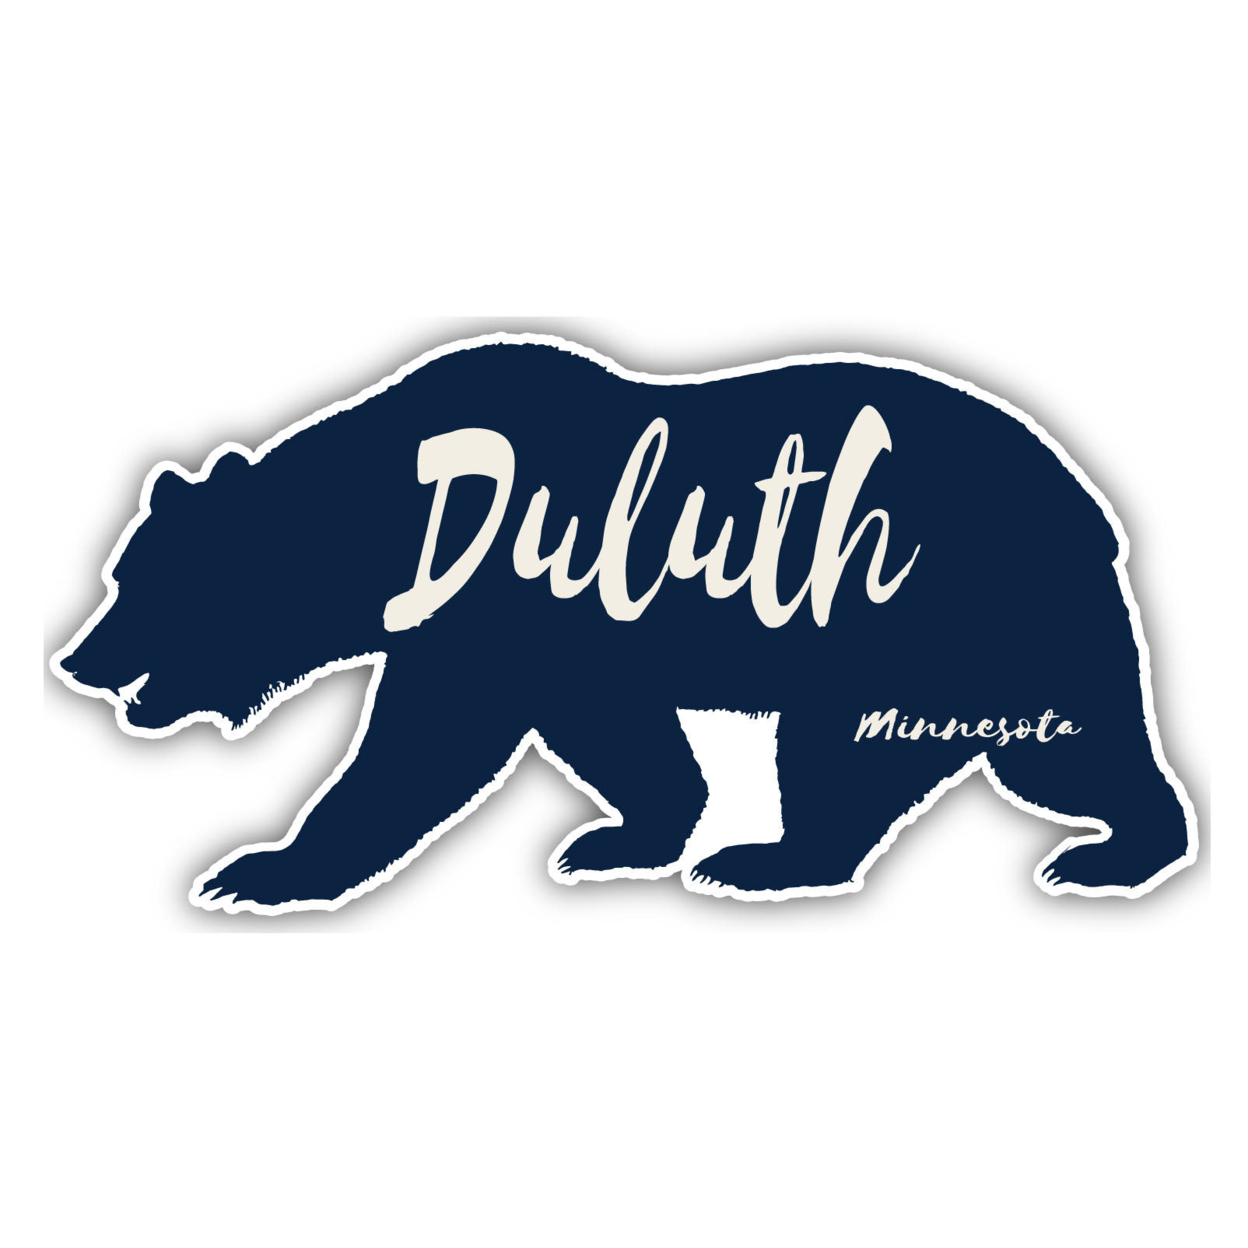 Duluth Minnesota Souvenir Decorative Stickers (Choose Theme And Size) - Single Unit, 10-Inch, Tent